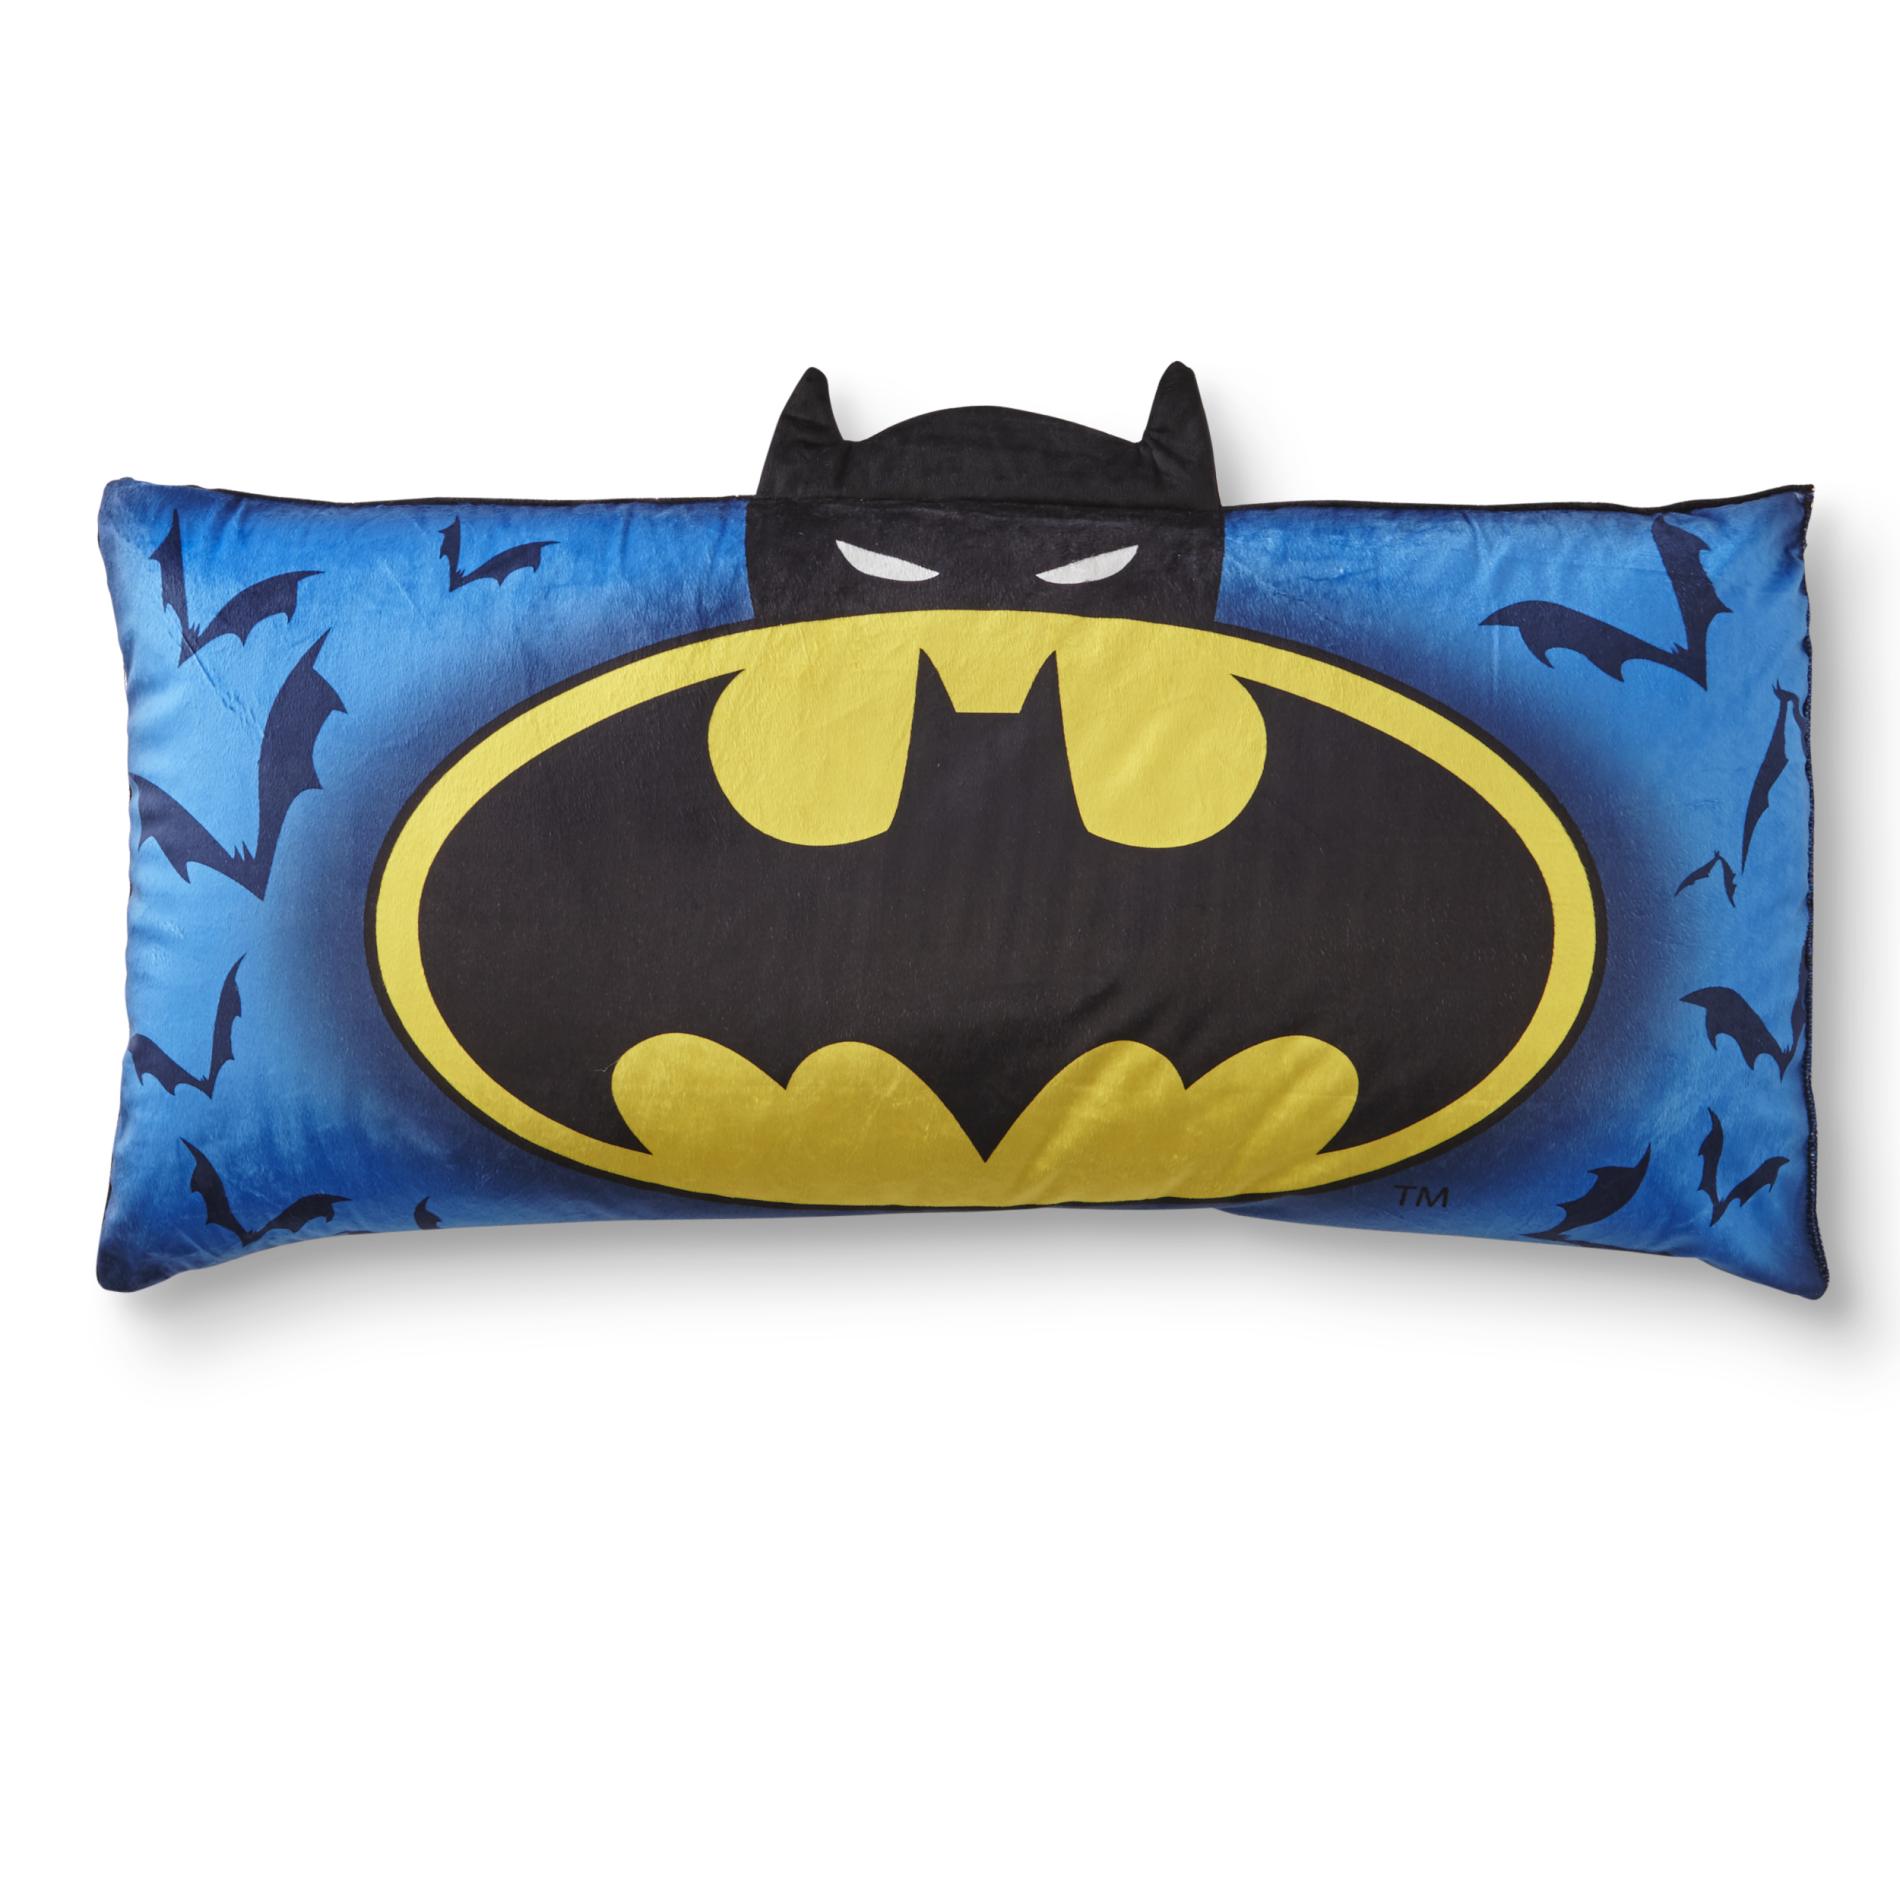 Warner Brothers Batman Kids' Body Pillow